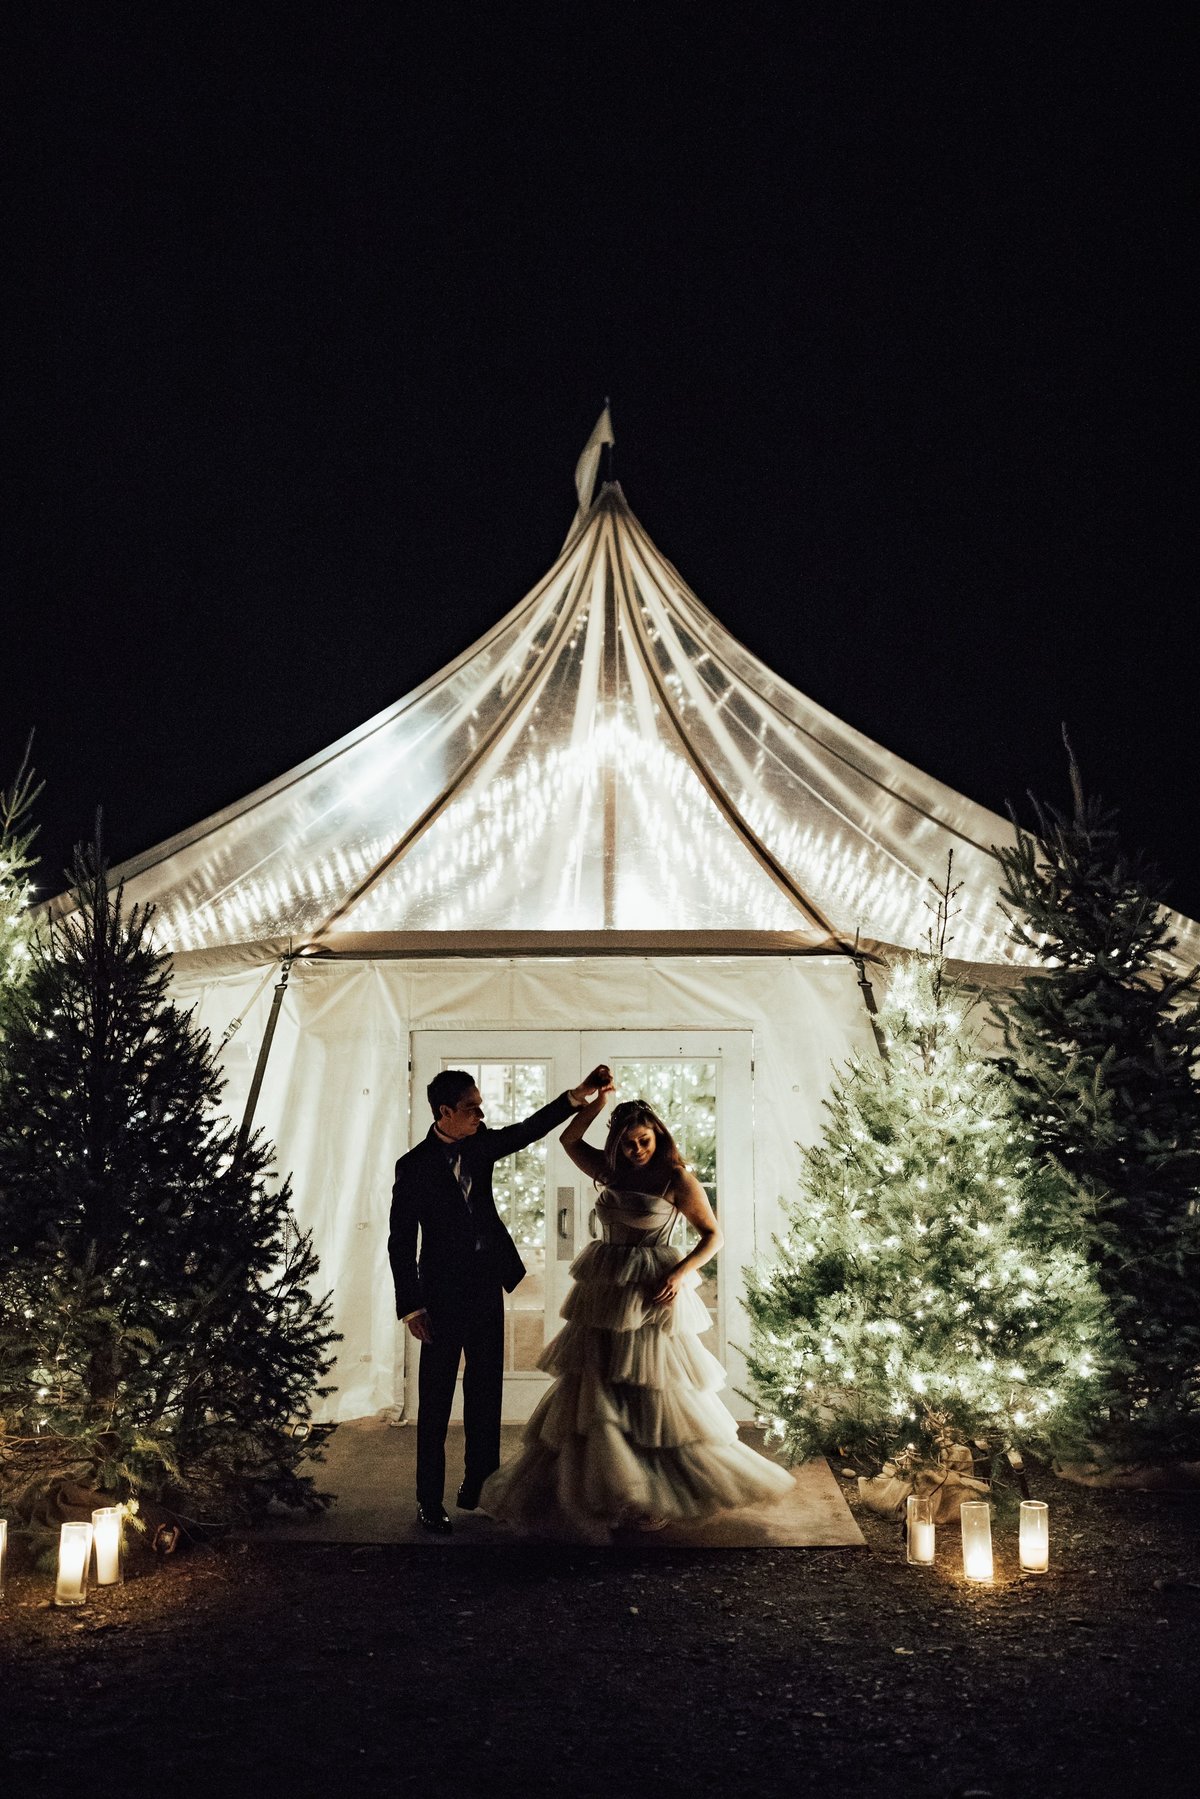 Christy-l-Johnston-Photography-Monica-Relyea-Events-Noelle-Downing-Instagram-Noelle_s-Favorite-Day-Wedding-Battenfelds-Christmas-tree-farm-Red-Hook-New-York-Hudson-Valley-upstate-november-2019-IMG_6605